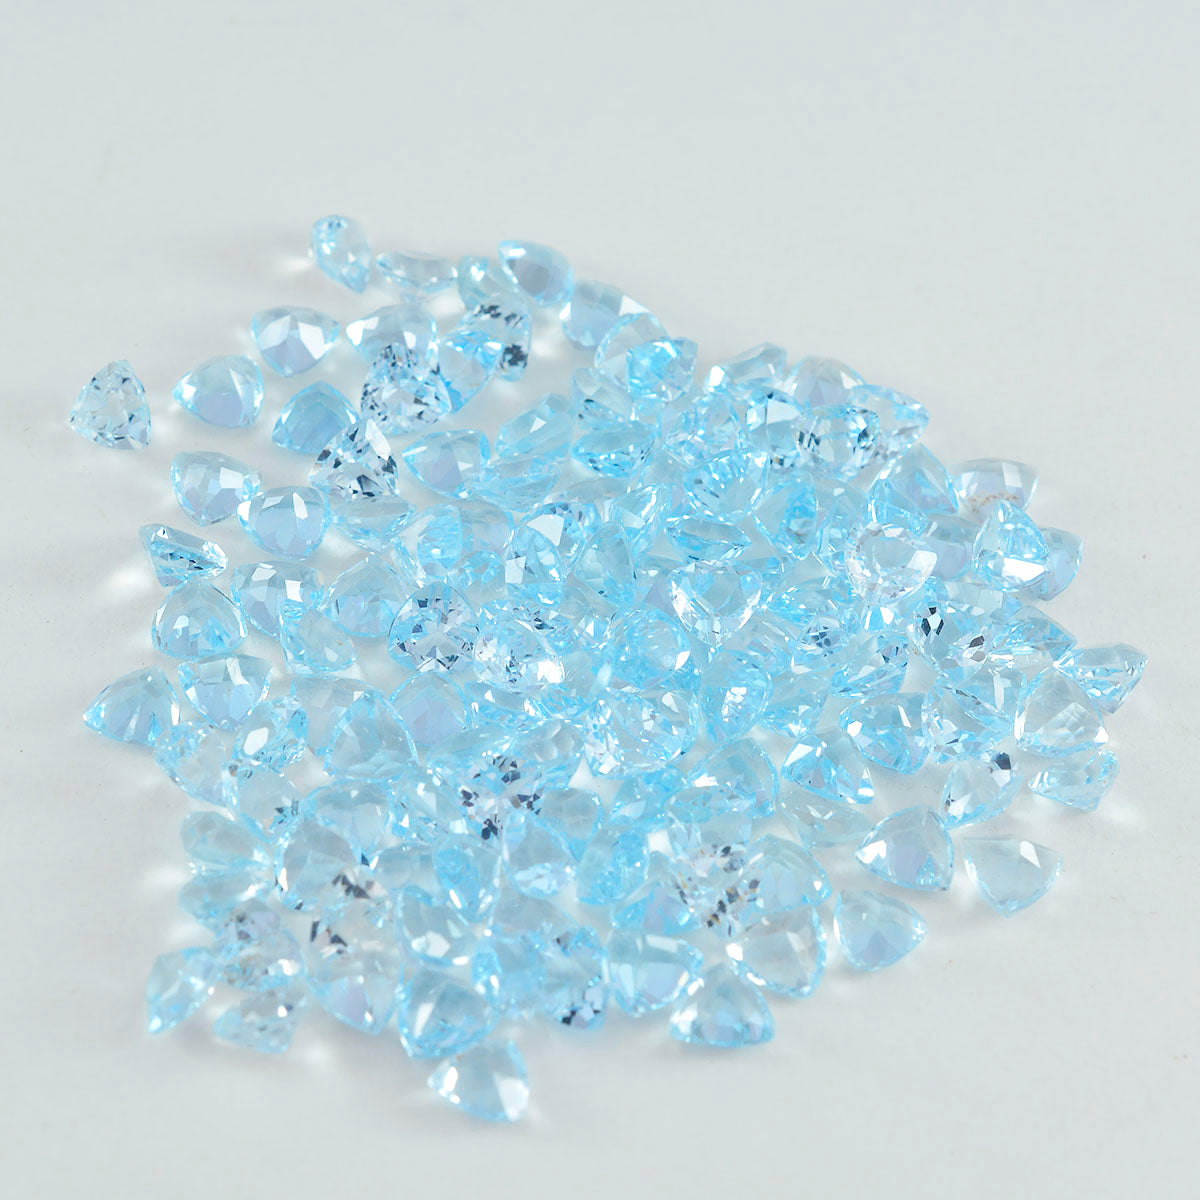 riyogems 1 st naturlig blå topas fasetterad 4x4 mm biljoner form vacker kvalitetssten